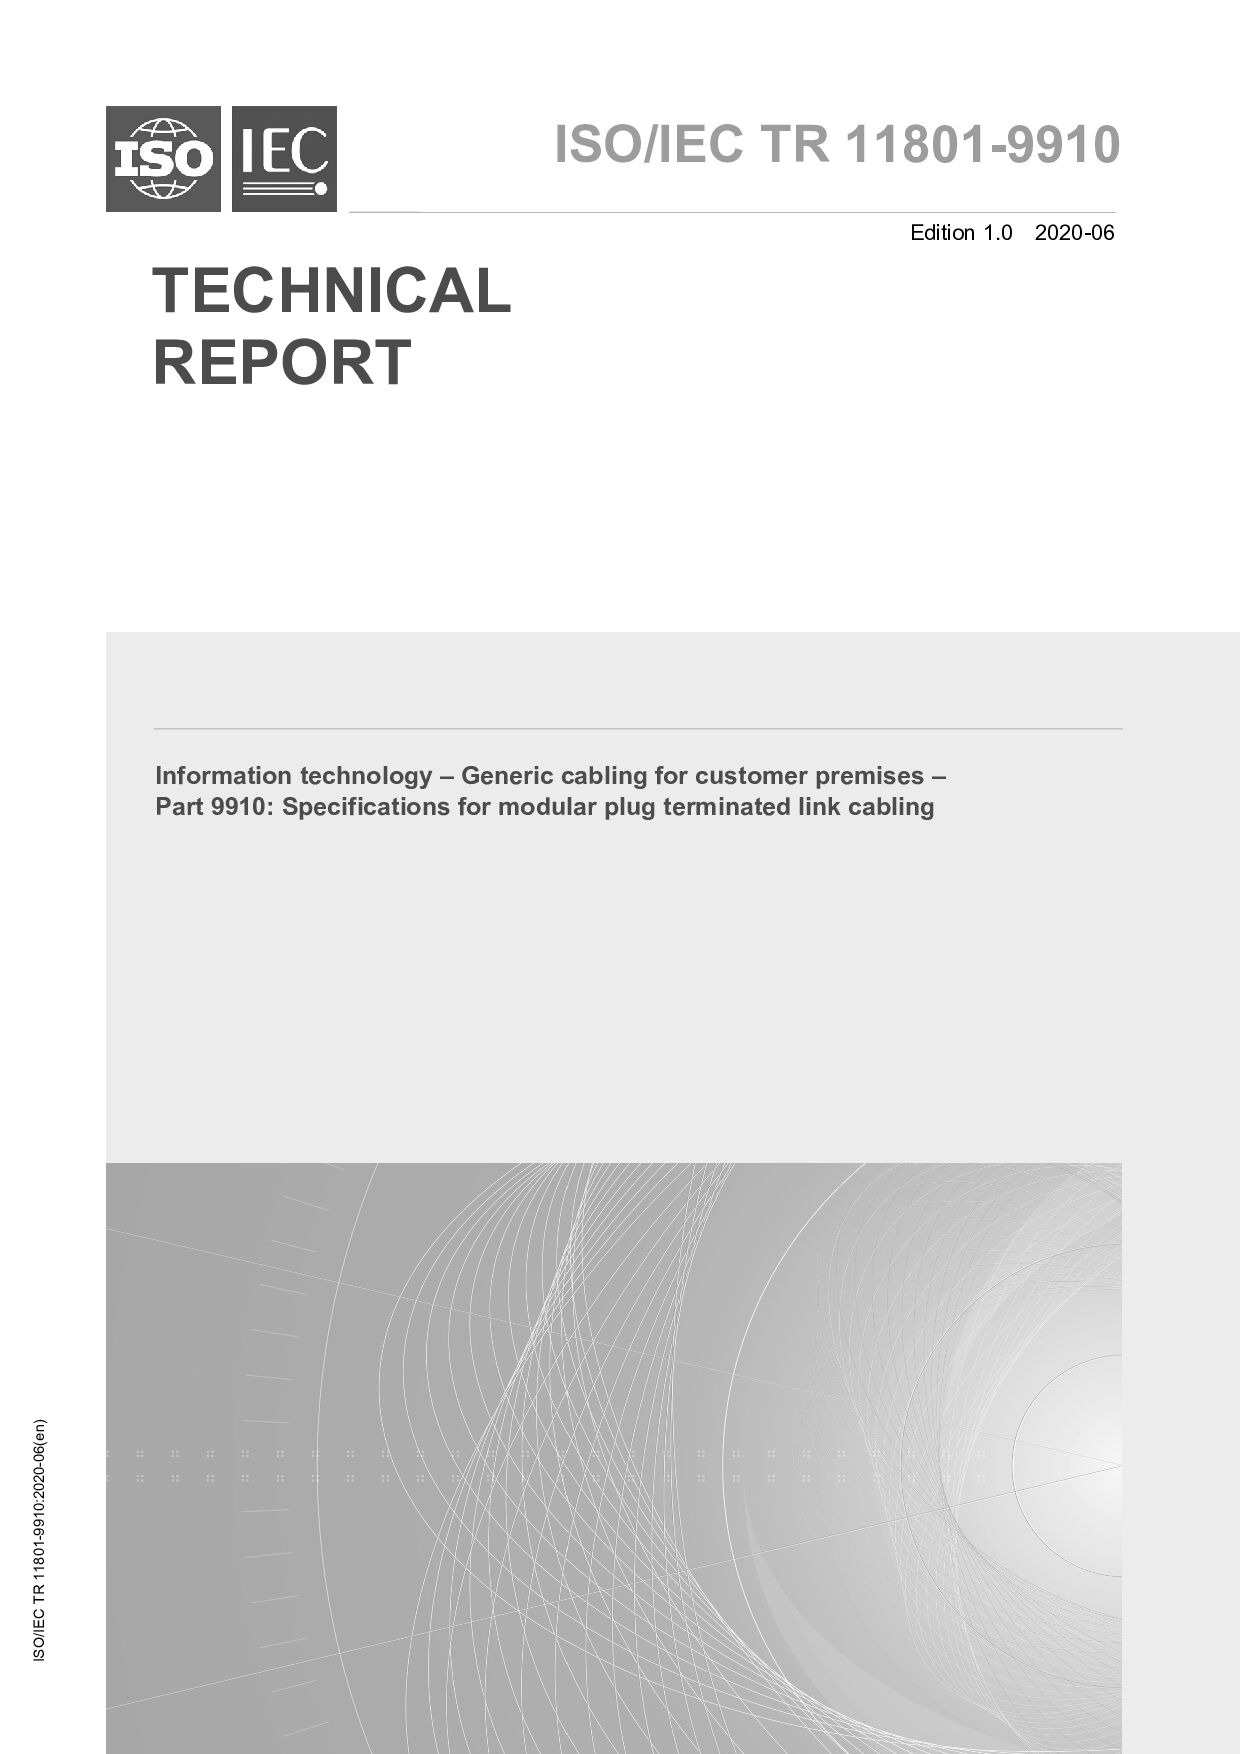 ISO/IEC TR 11801-9910:2020